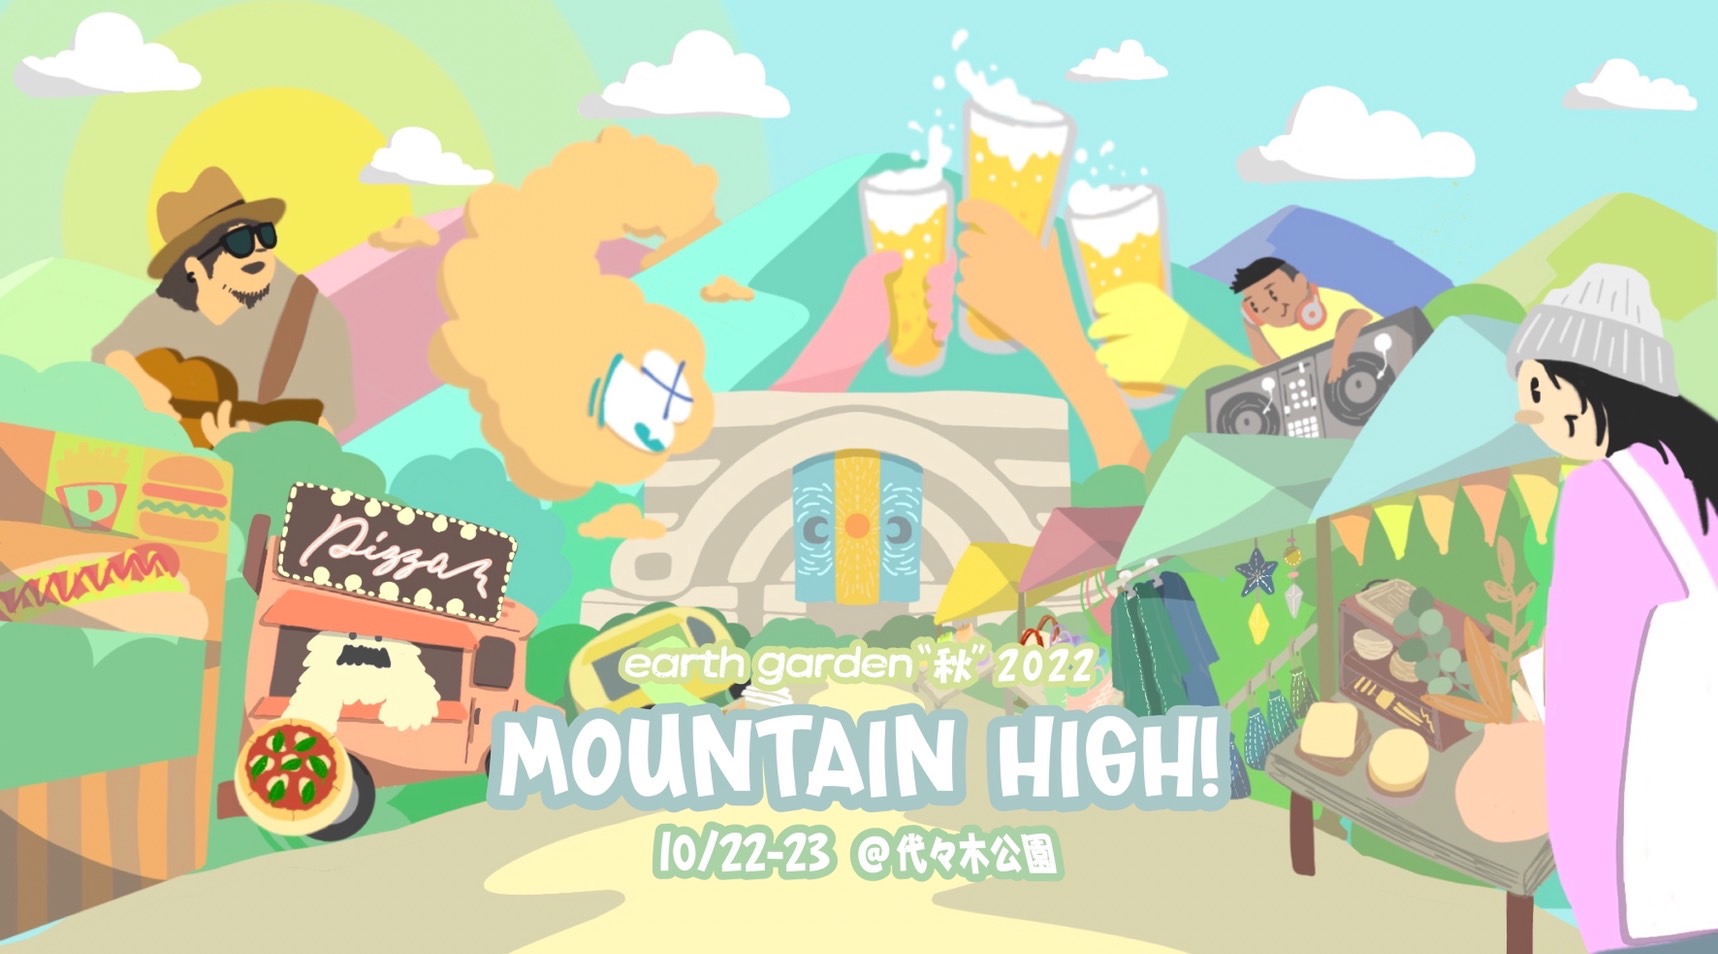 『earth garden “秋” 2022 Mountain High!！』でヒムカフェを販売します！